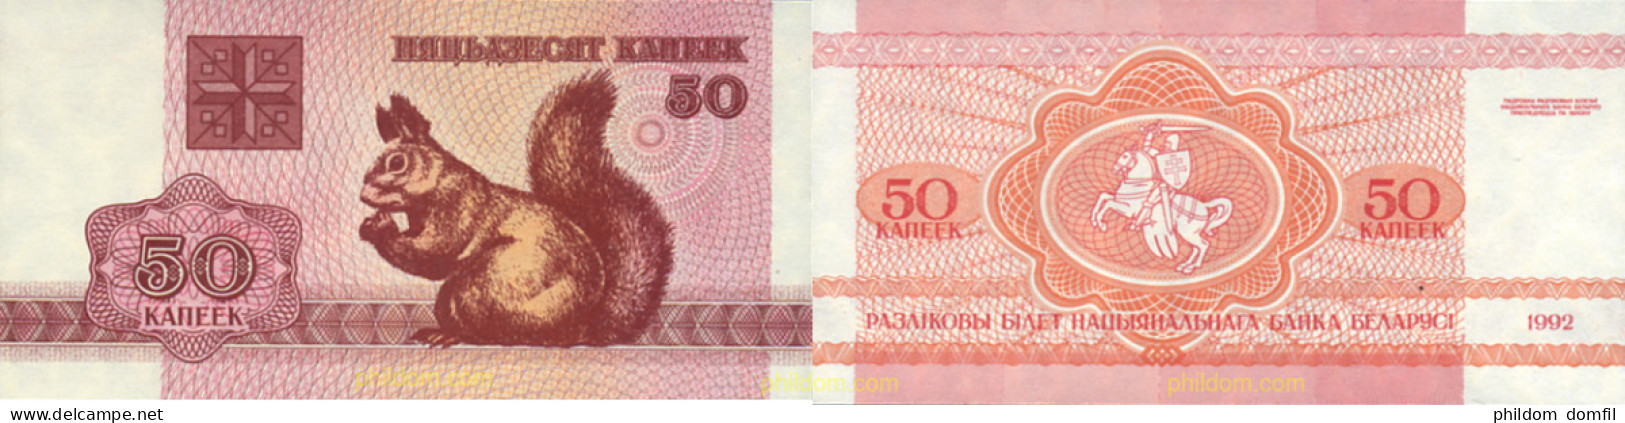 946 BIELORRUSIA 1992 50 KAPEEK BIELORUSIA 1992 - Belarus